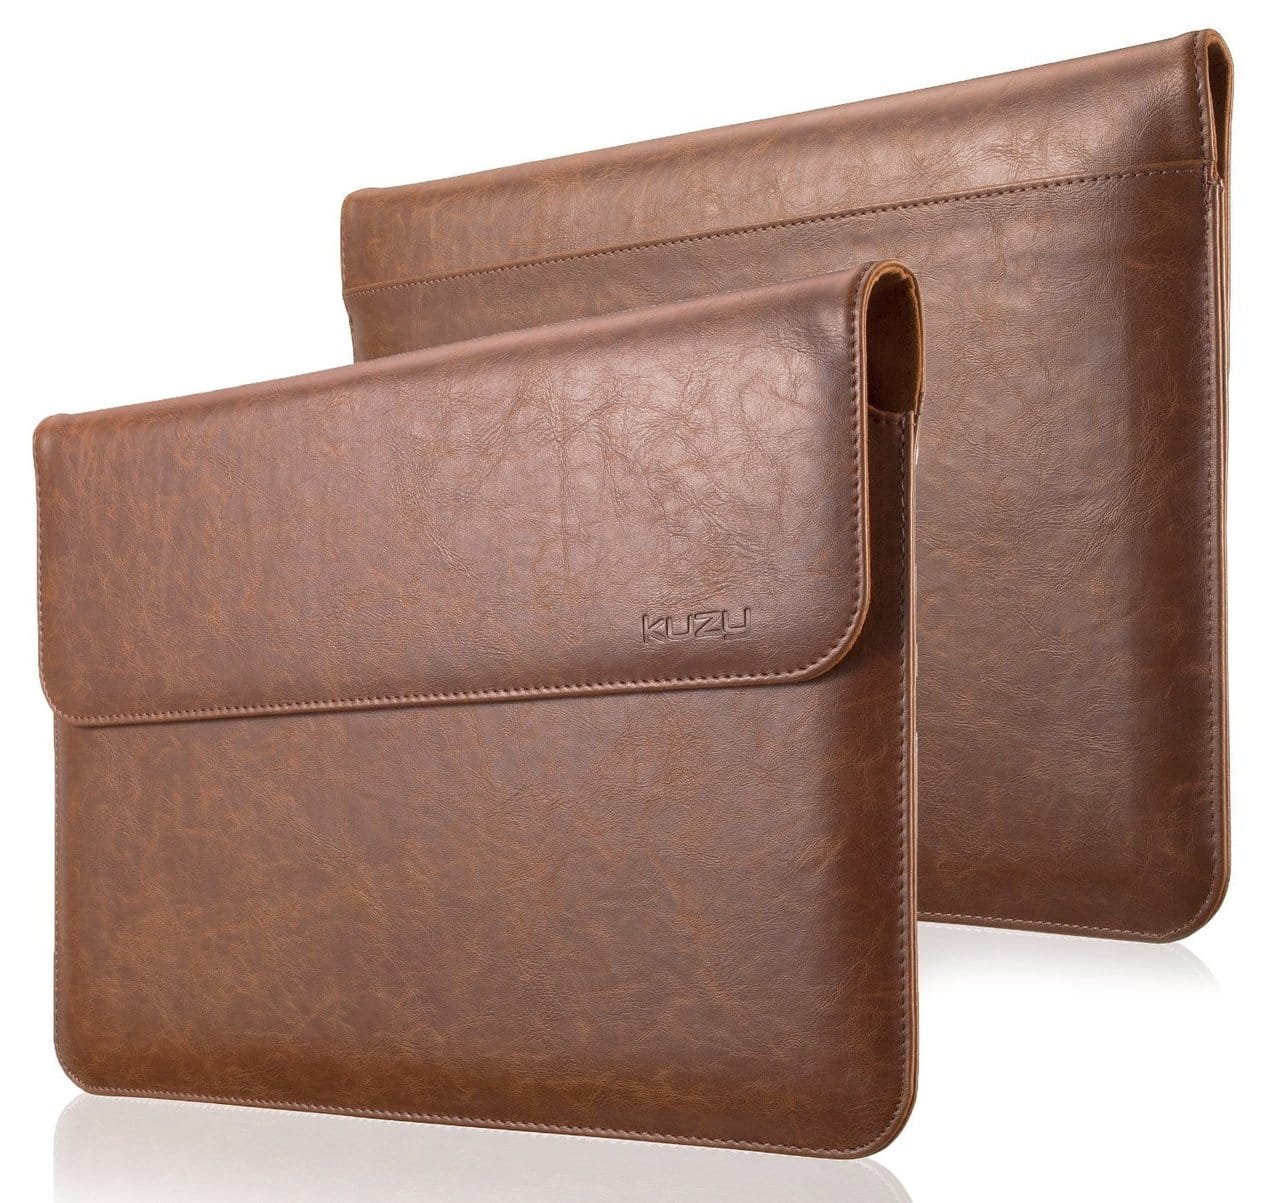 kuzy leather slim macbook air case